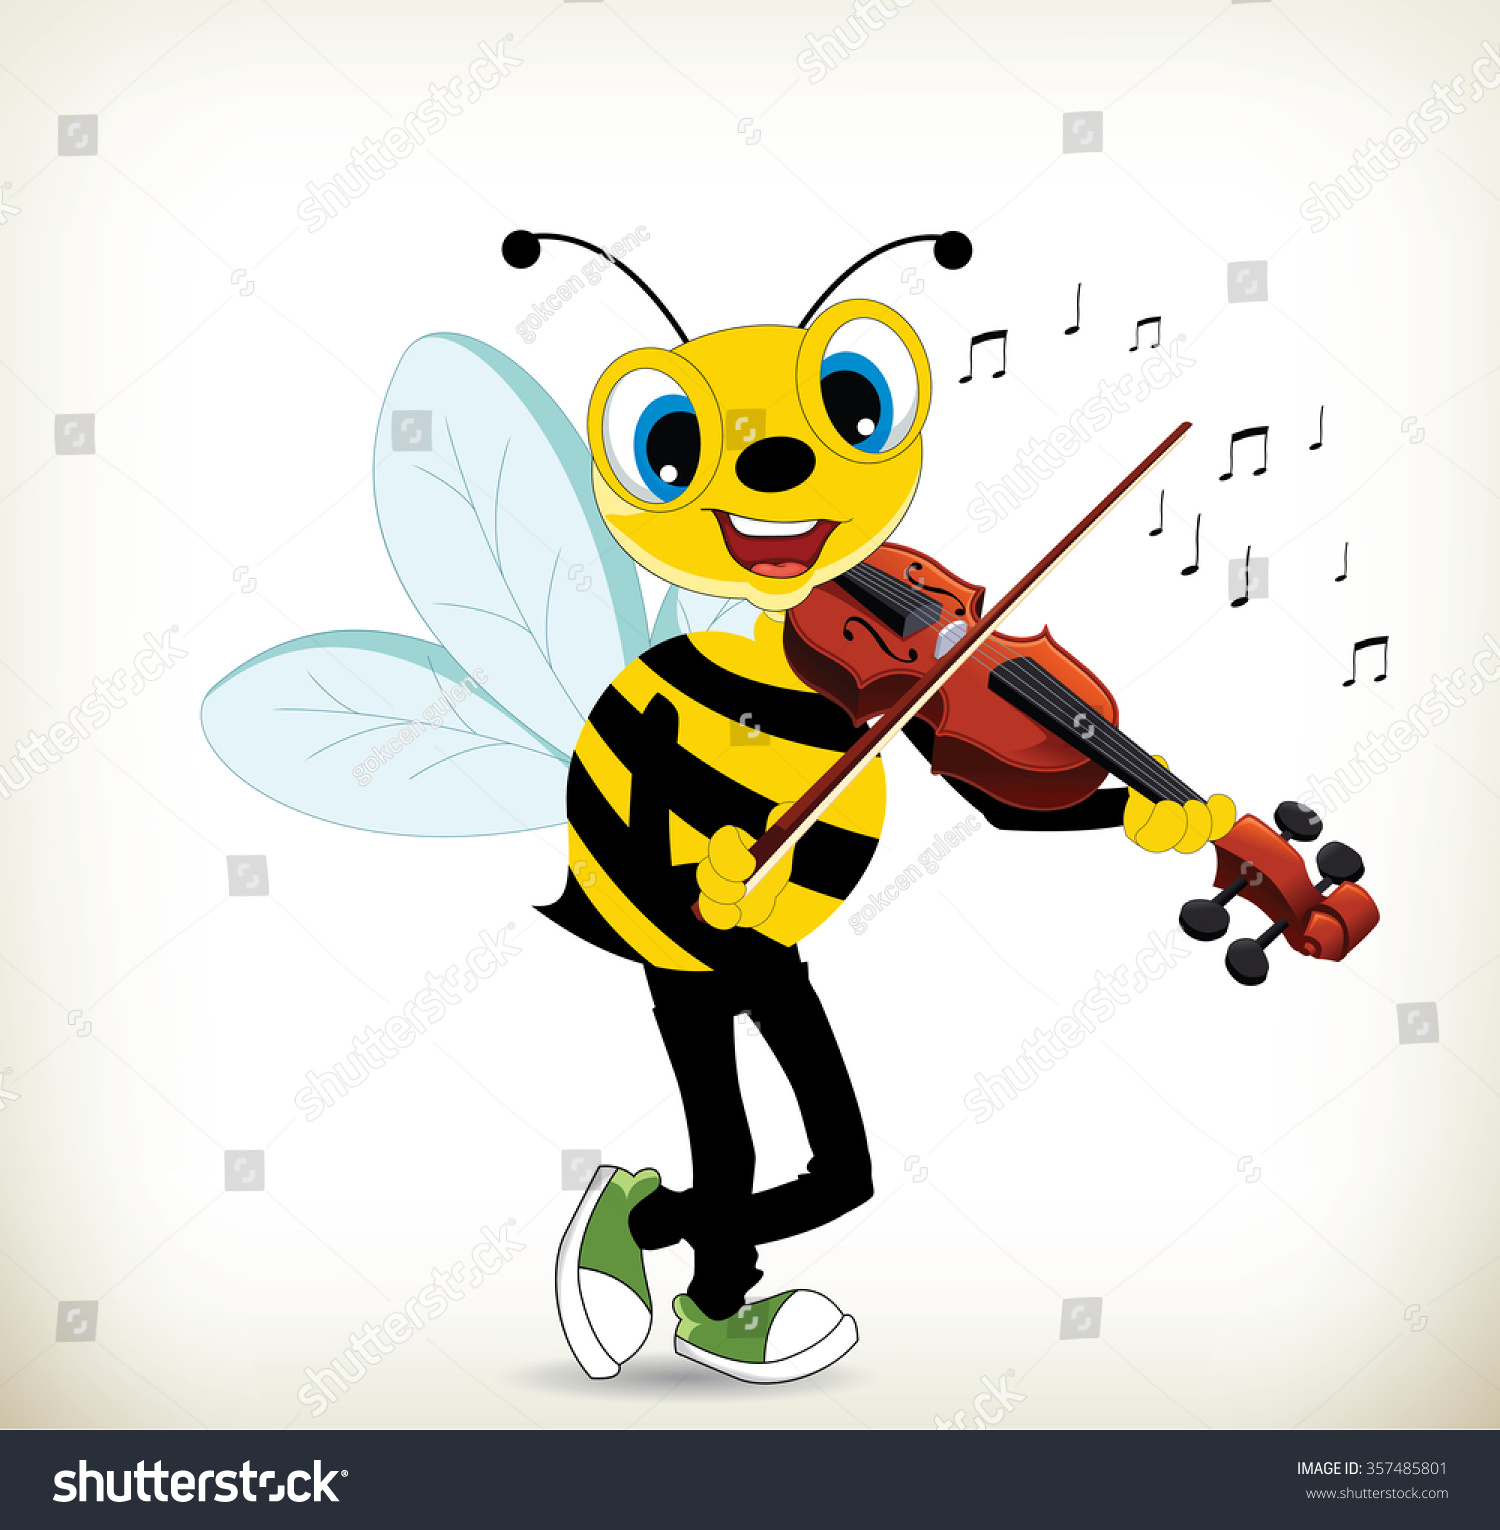 stock-vector-cartoon-bee-playing-a-violin-357485801.jpg